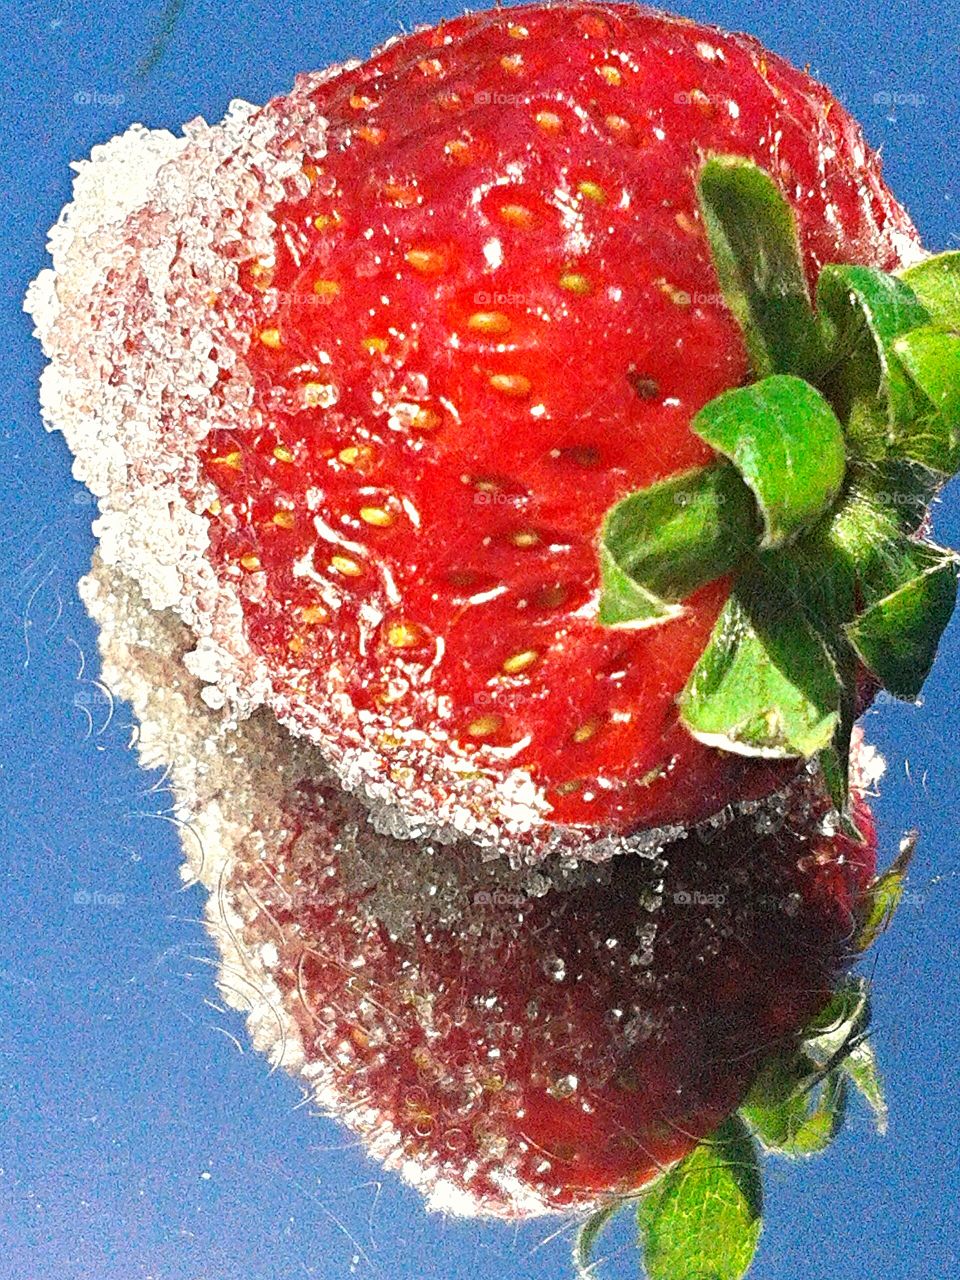 Strawberry. Sugar dipped.